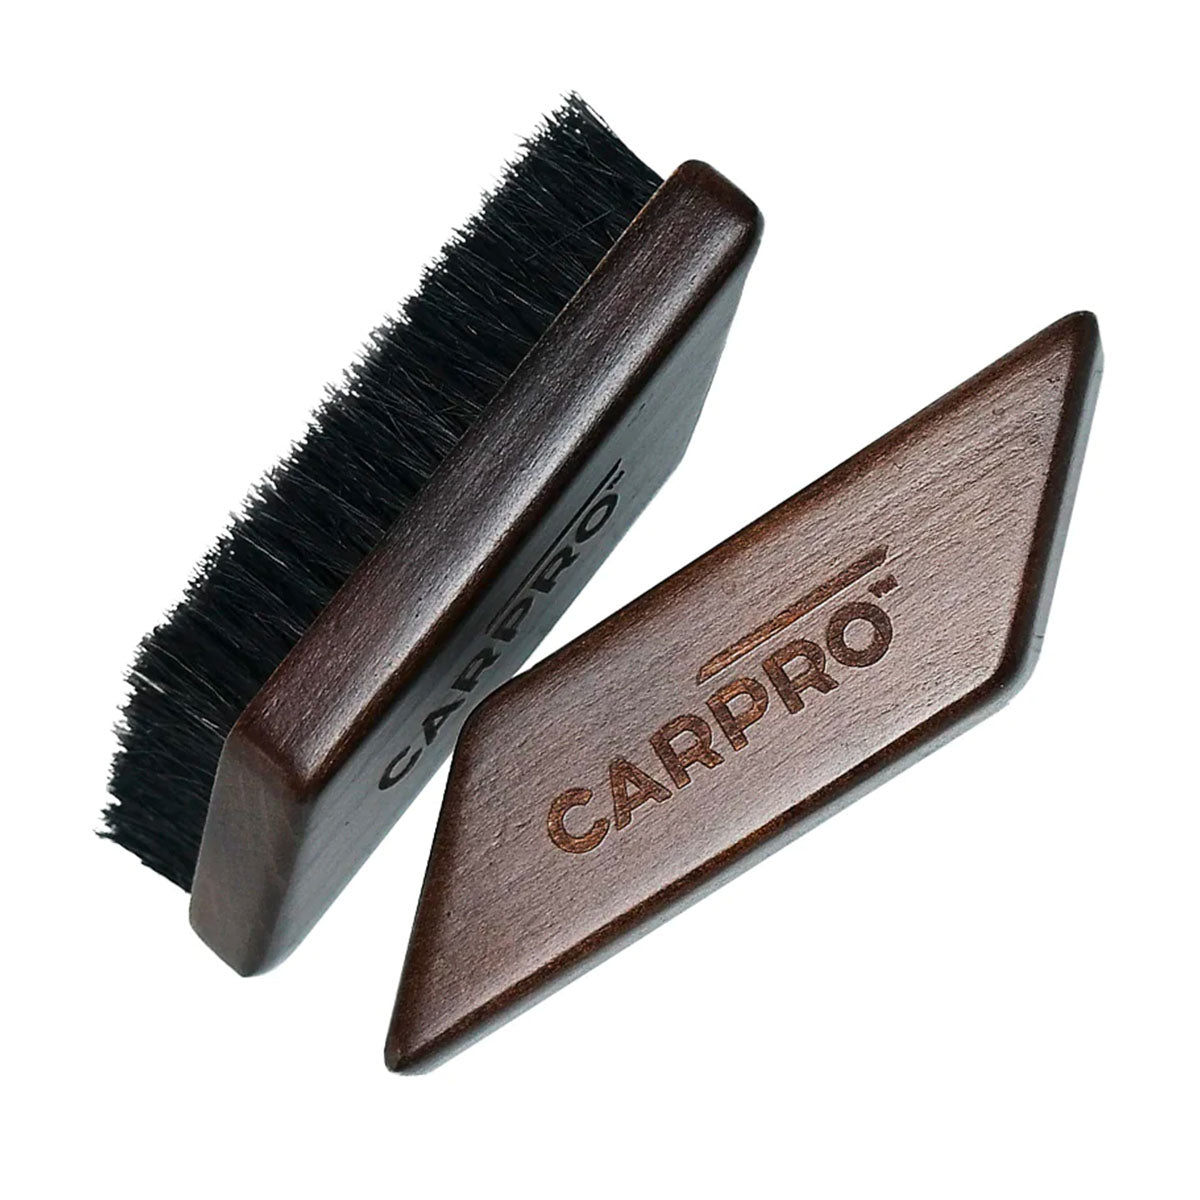 CarPro Leather and Fabric Brush